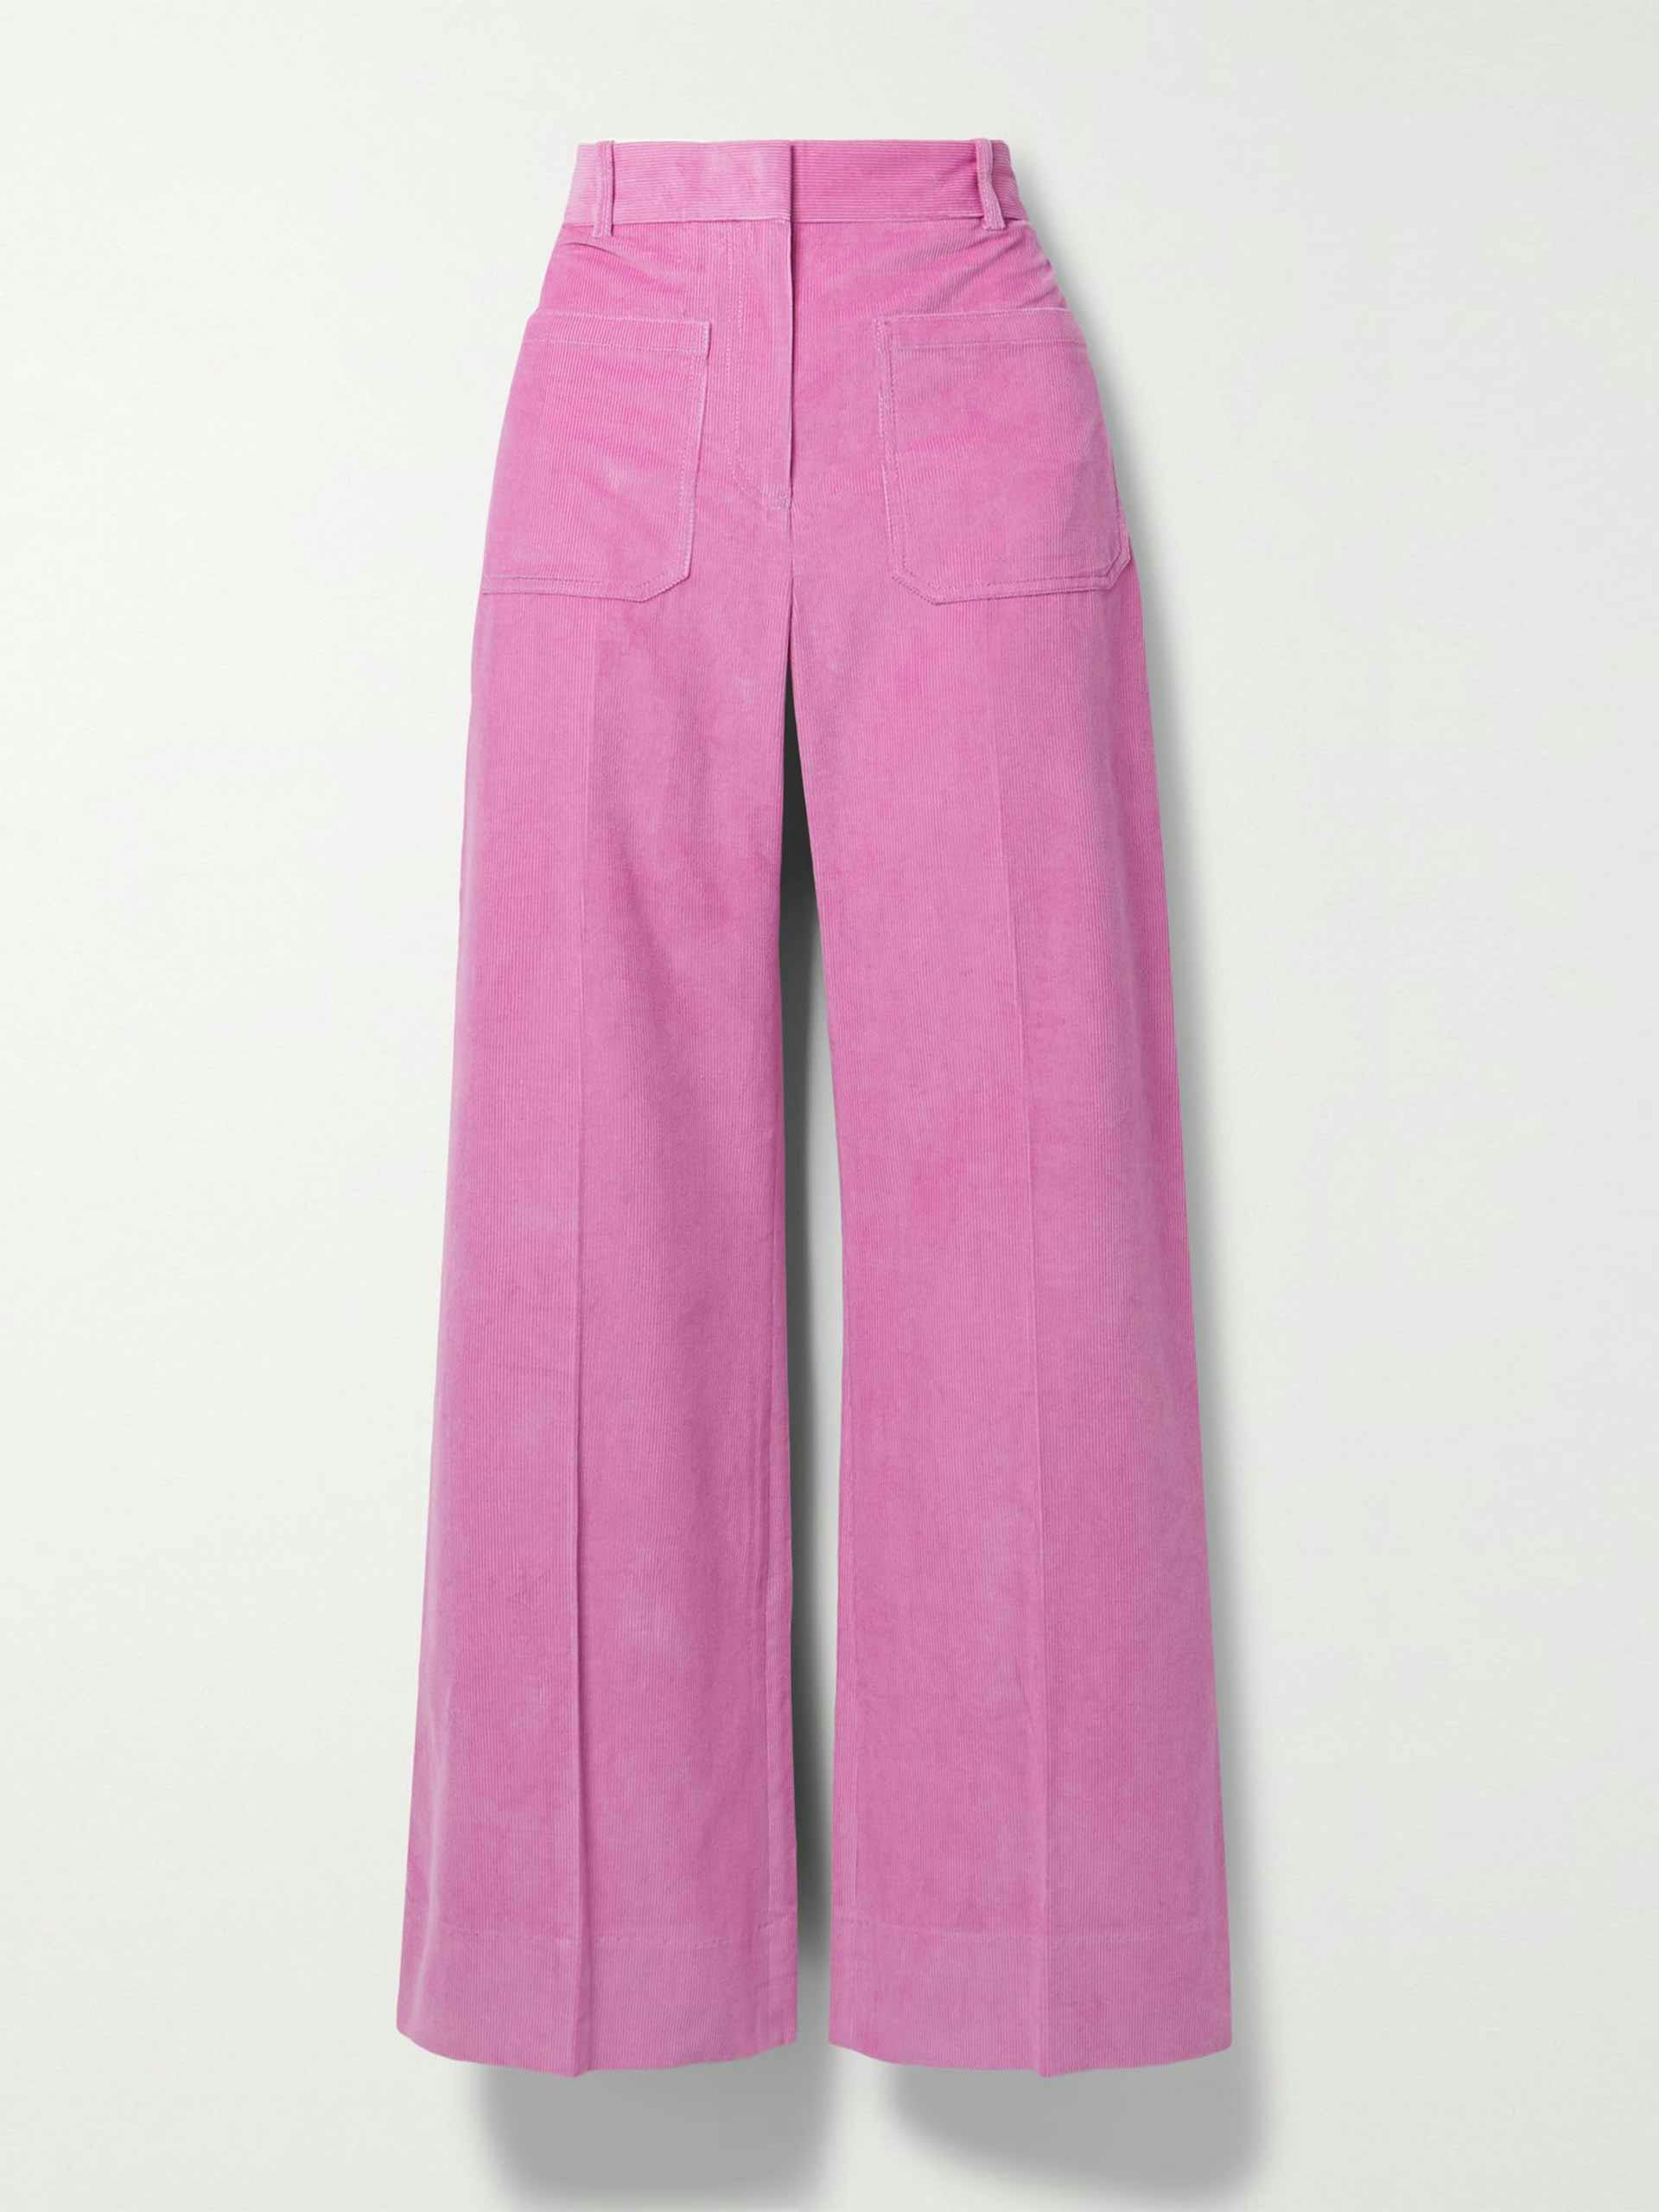 Pink cotton-corduroy flared pants